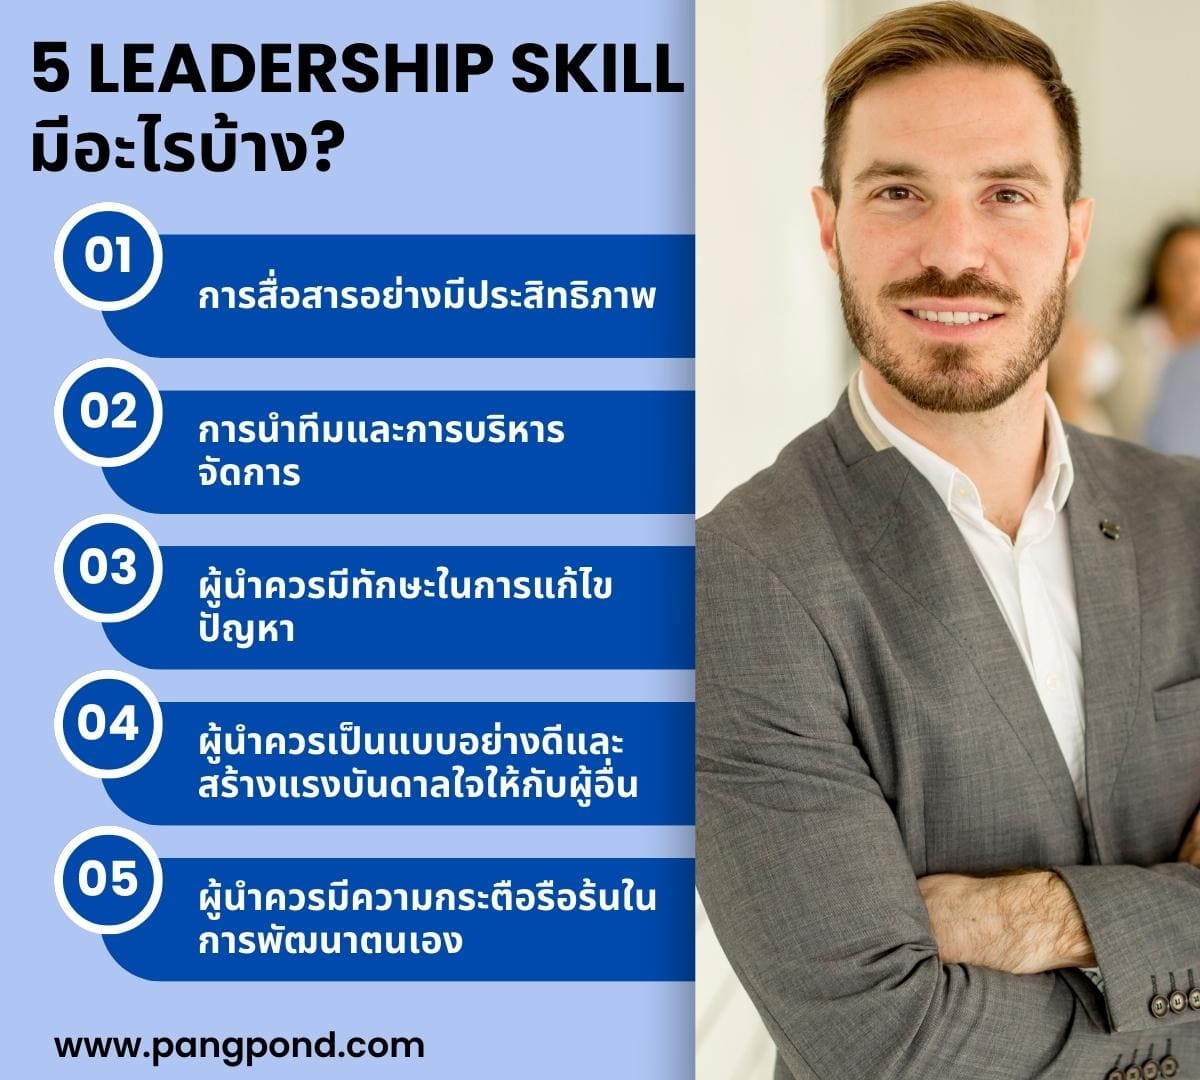 5 Leadership Skill มีอะไรบ้าง